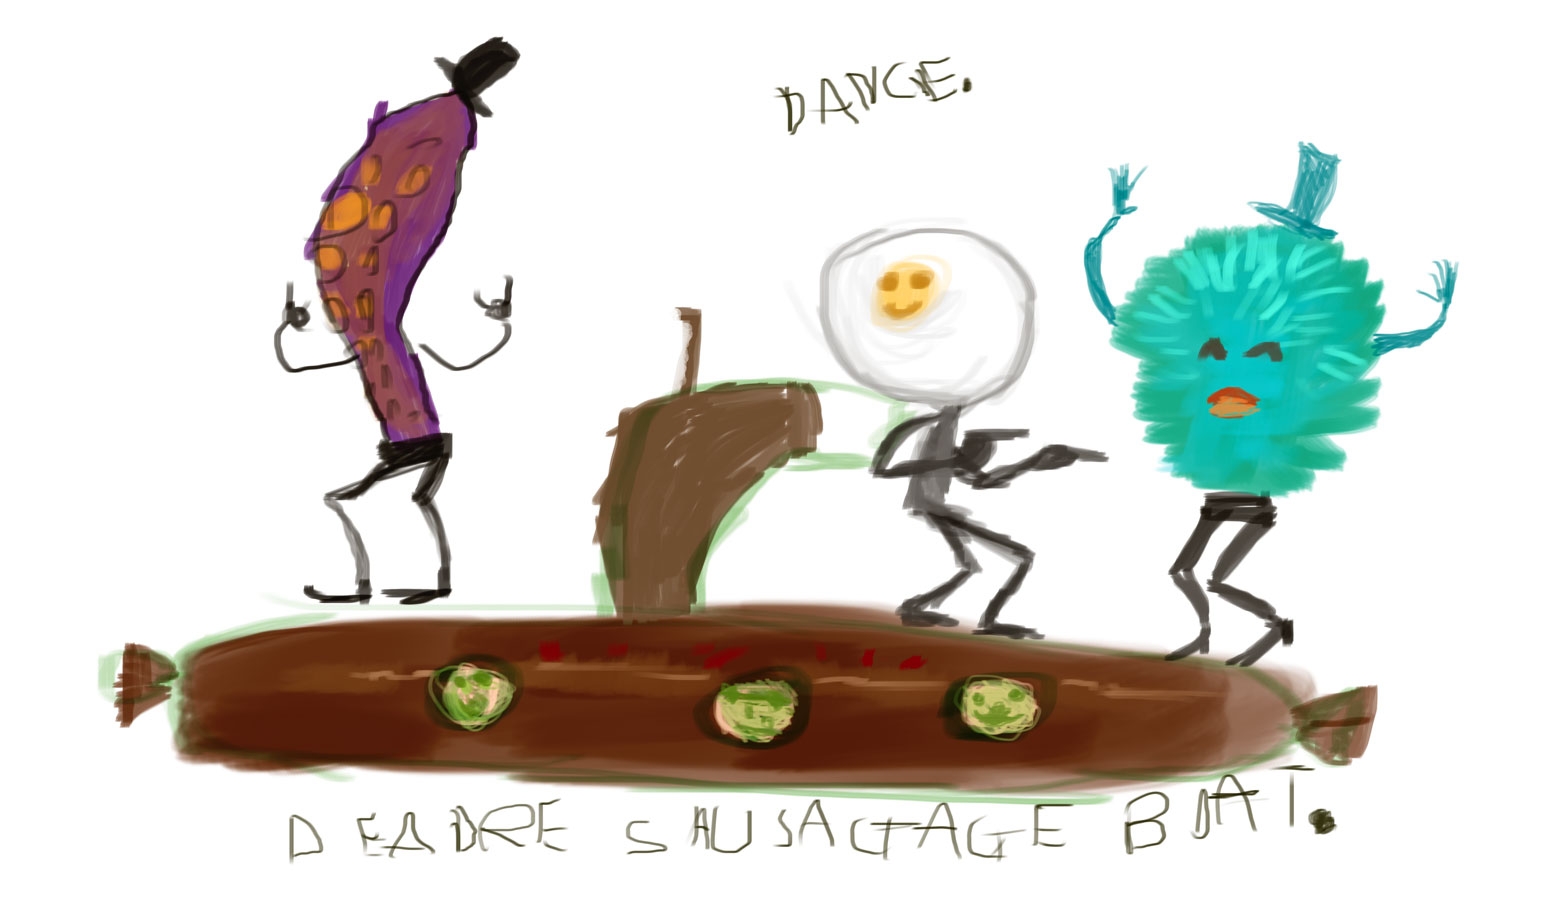 deadre sausagagage boat. dance.  by fungi